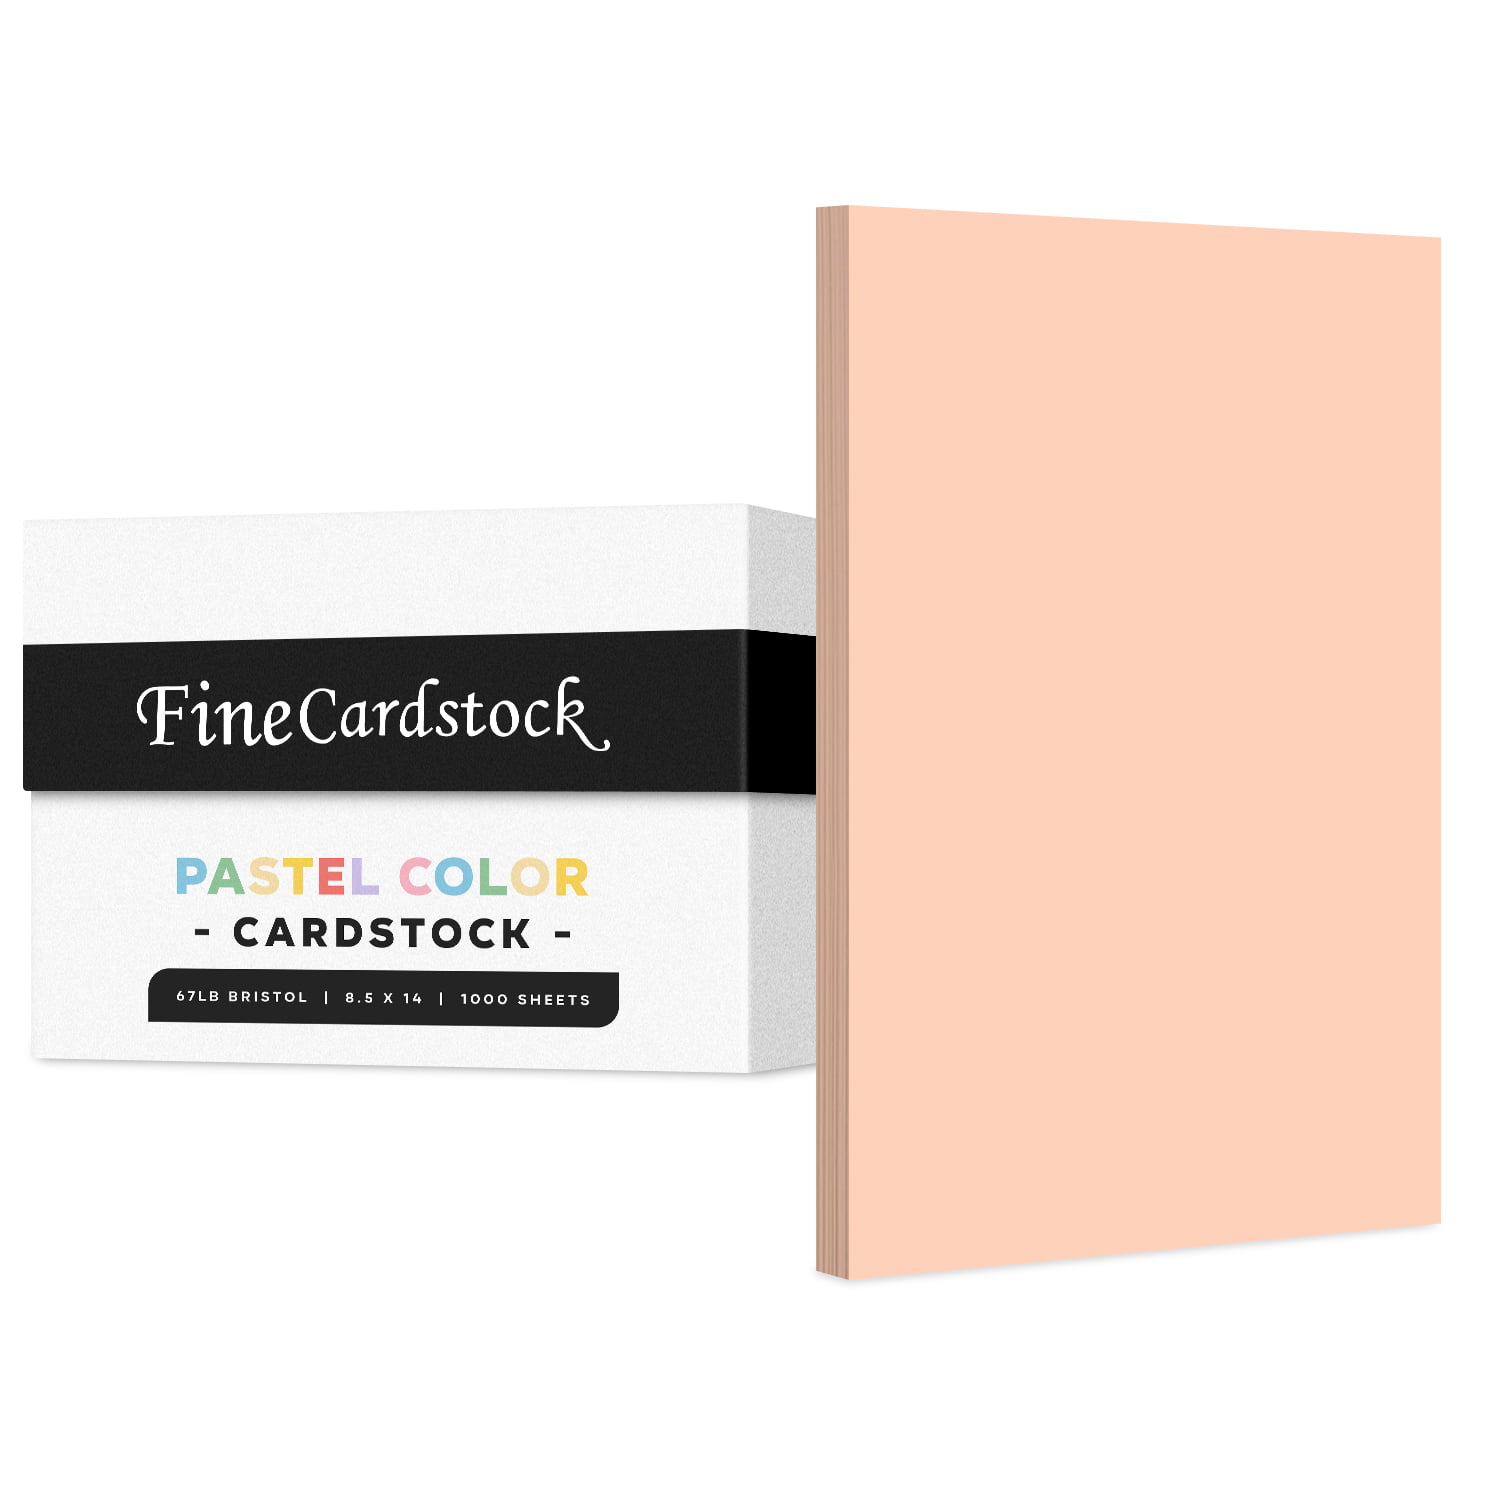 1 Case of 1000 Sheets, 8.5 inch x 14 inch Card Stock Paper, 67lb Vellum Bristol Pastel Color Cardstock (Cream), Beige